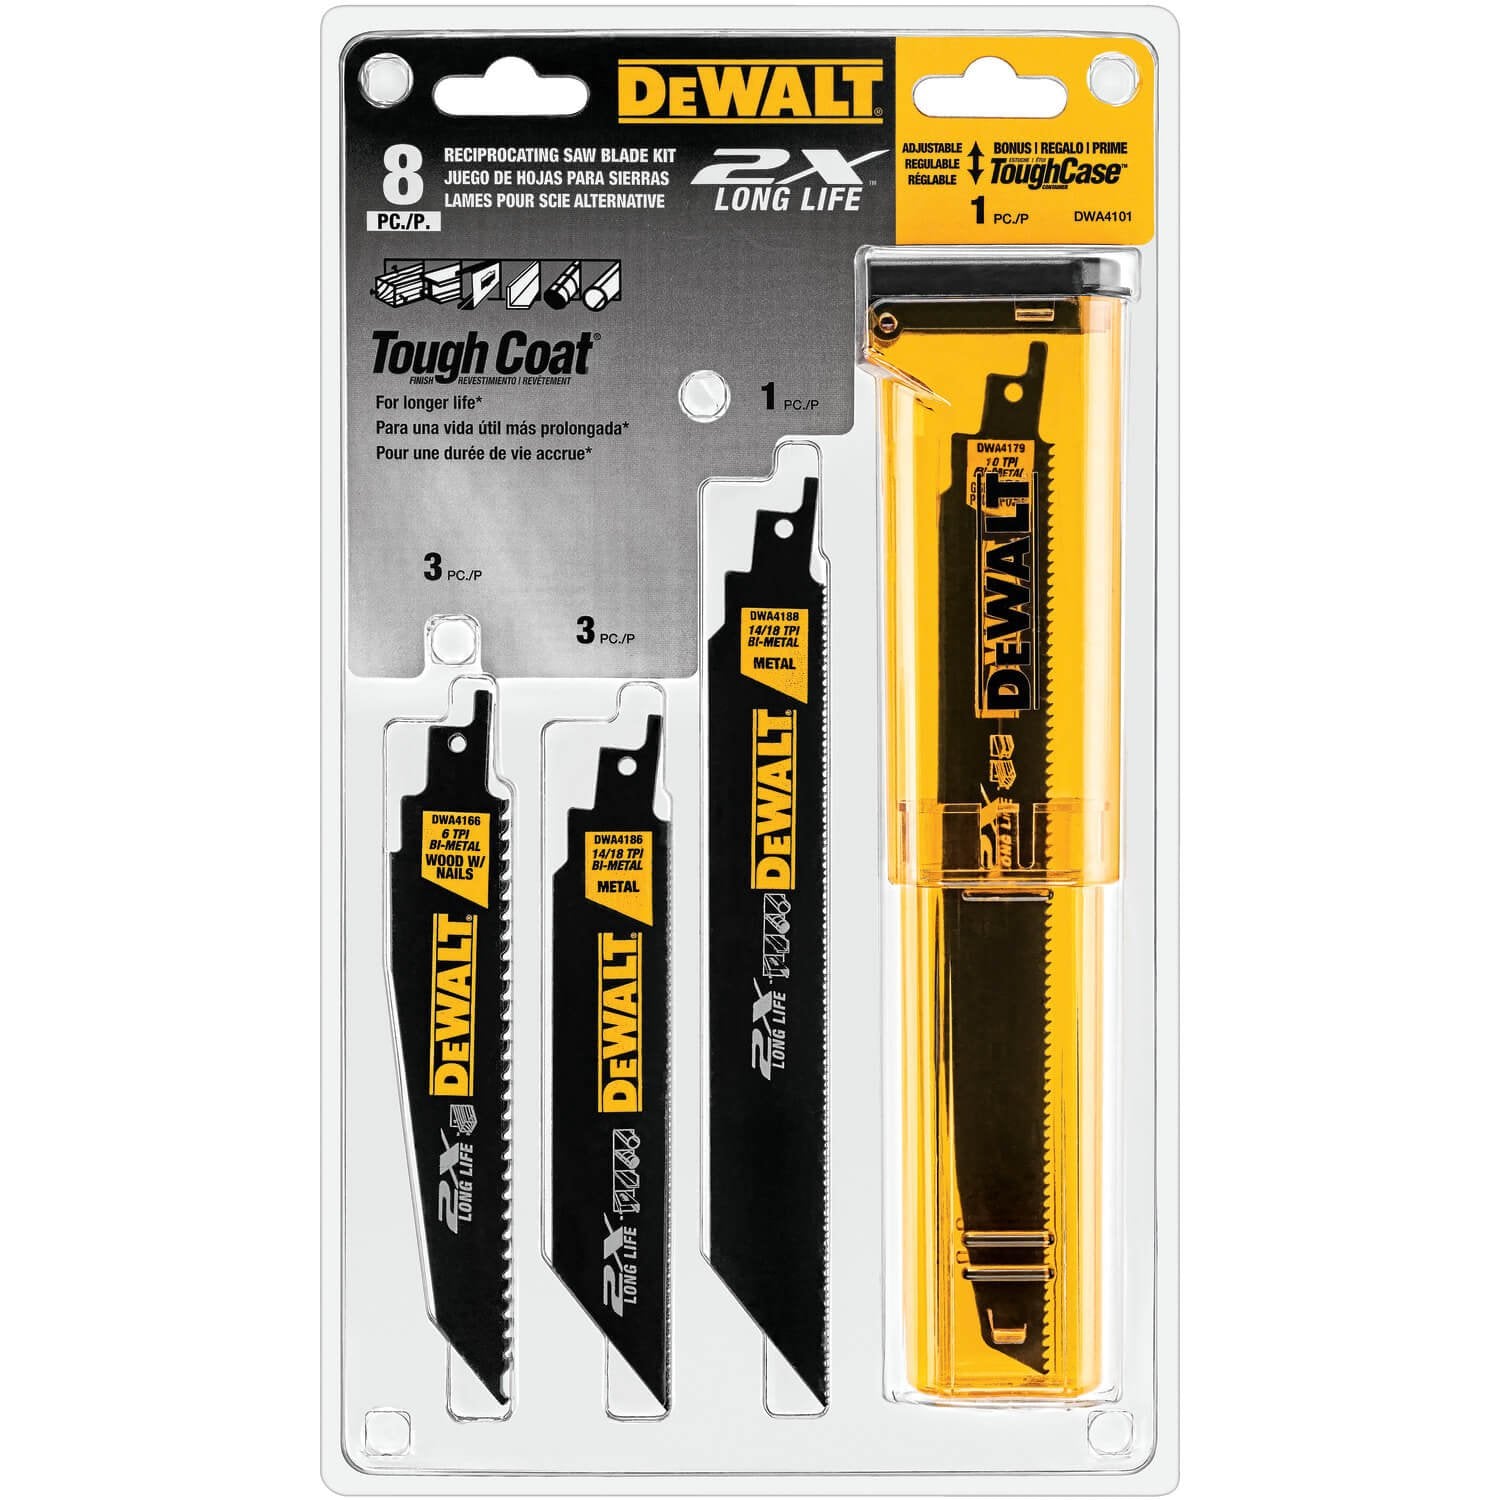 DEWALT DWA4101 Bi-Metal 2X Reciprocating Saw Blade Set, 8-Piece